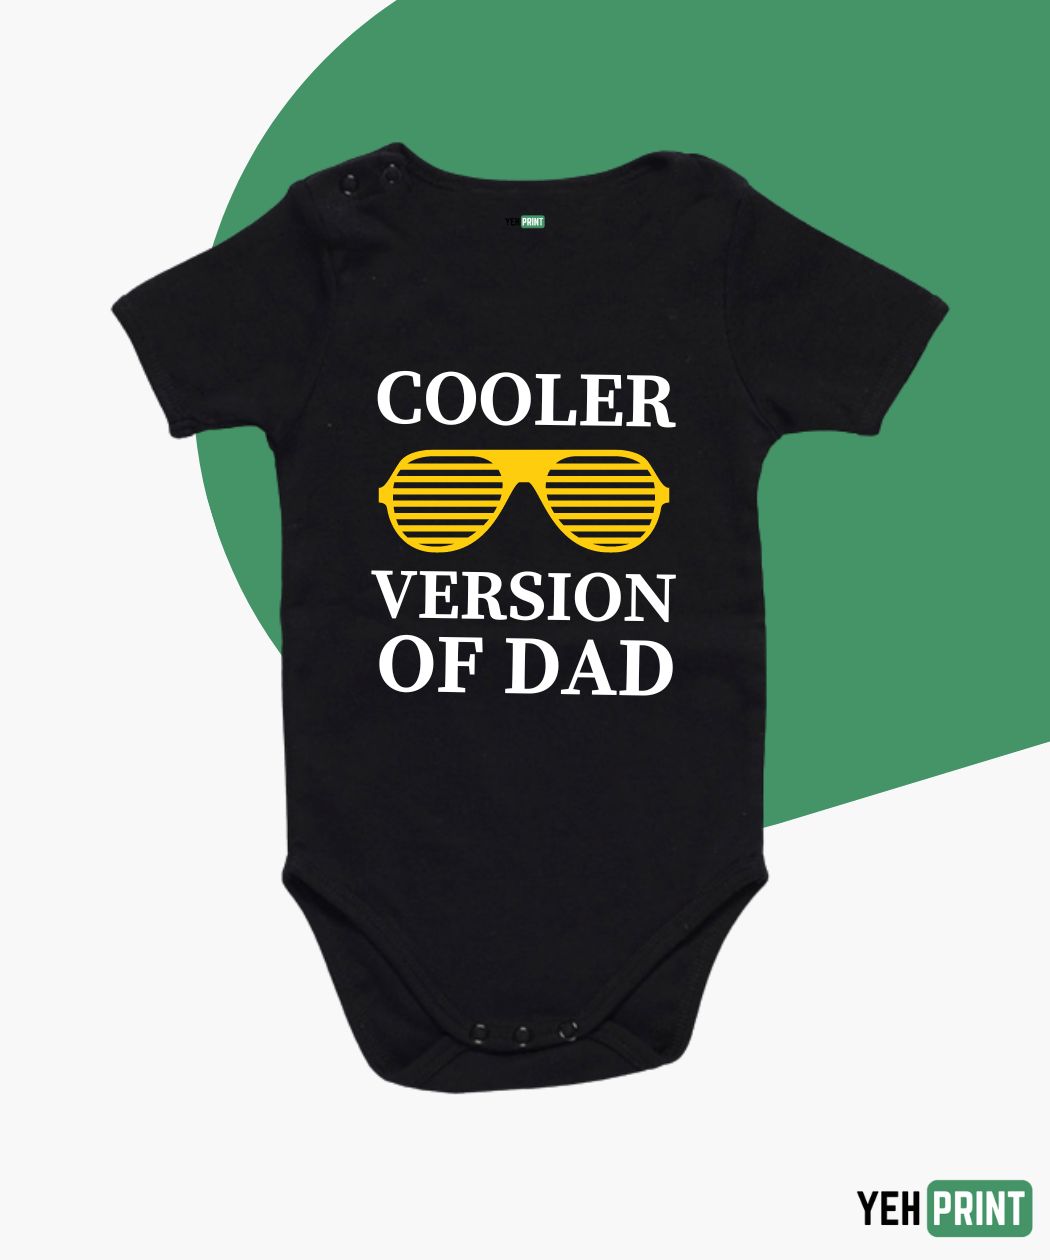 Cooler version of Dad Baby Romper in Pakistan. Personalised Newborn 100% cotton baby romper suit.